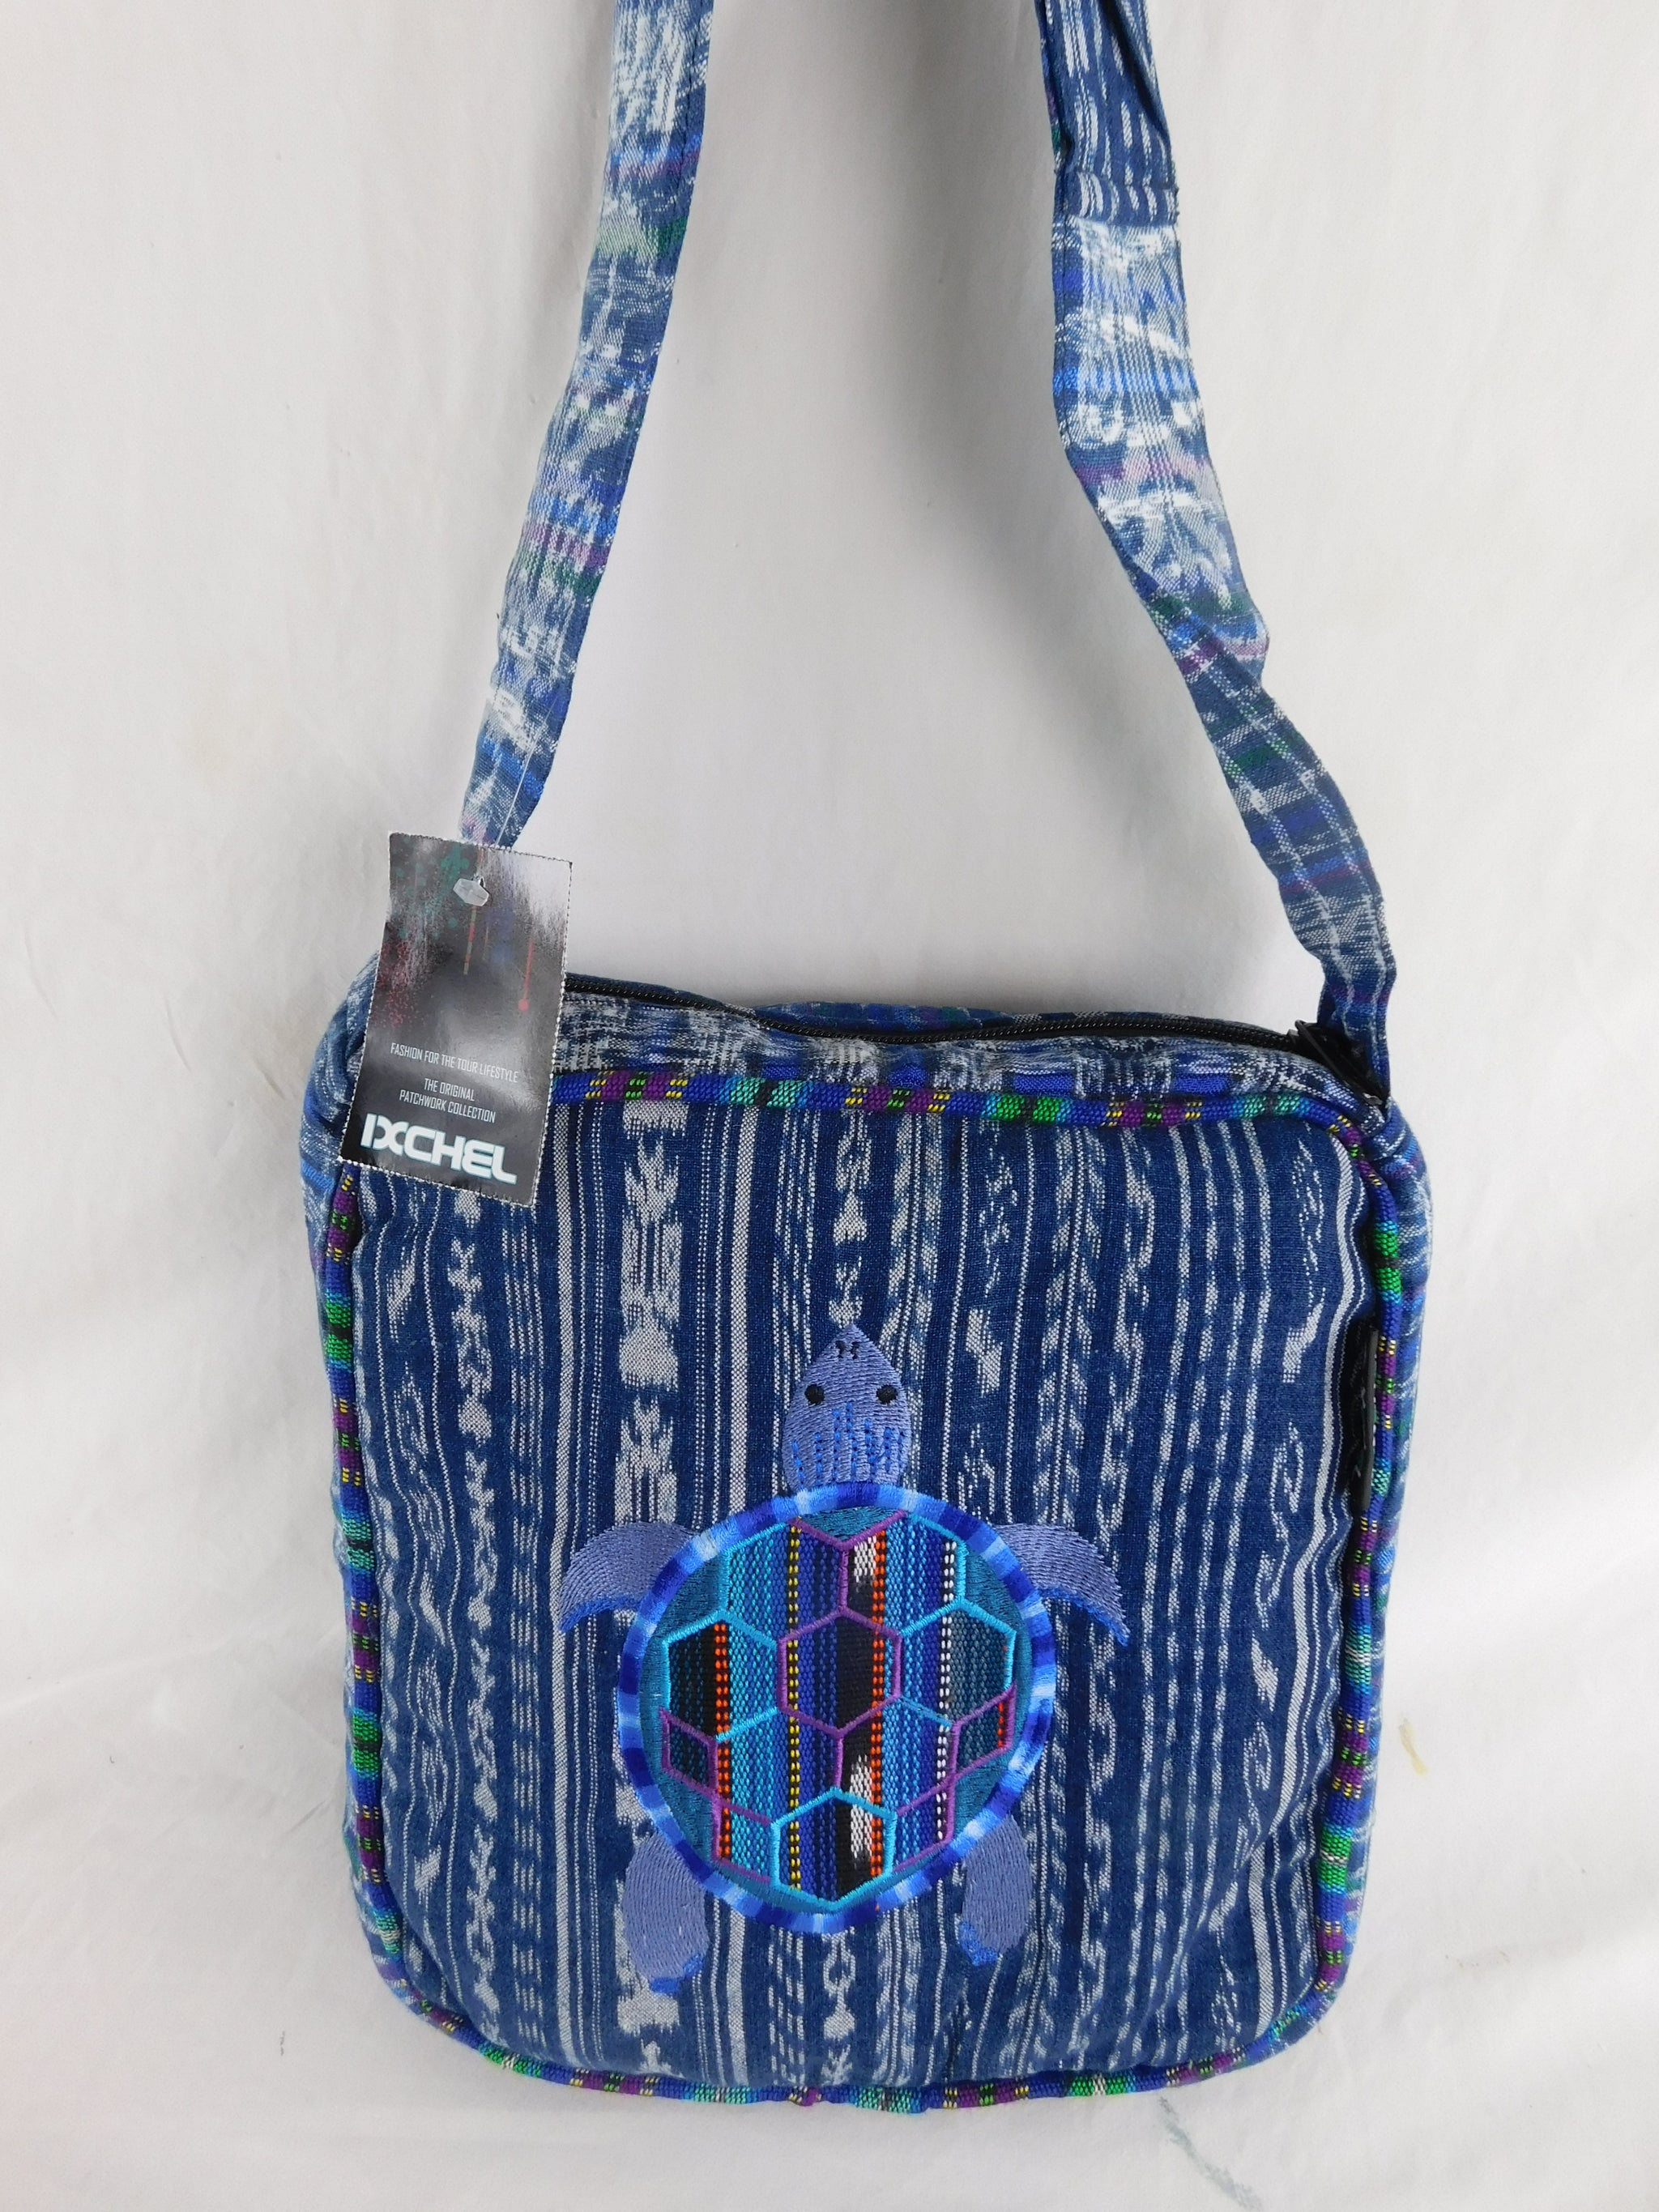 Hand-Woven Terrapin Bag  in native cotton